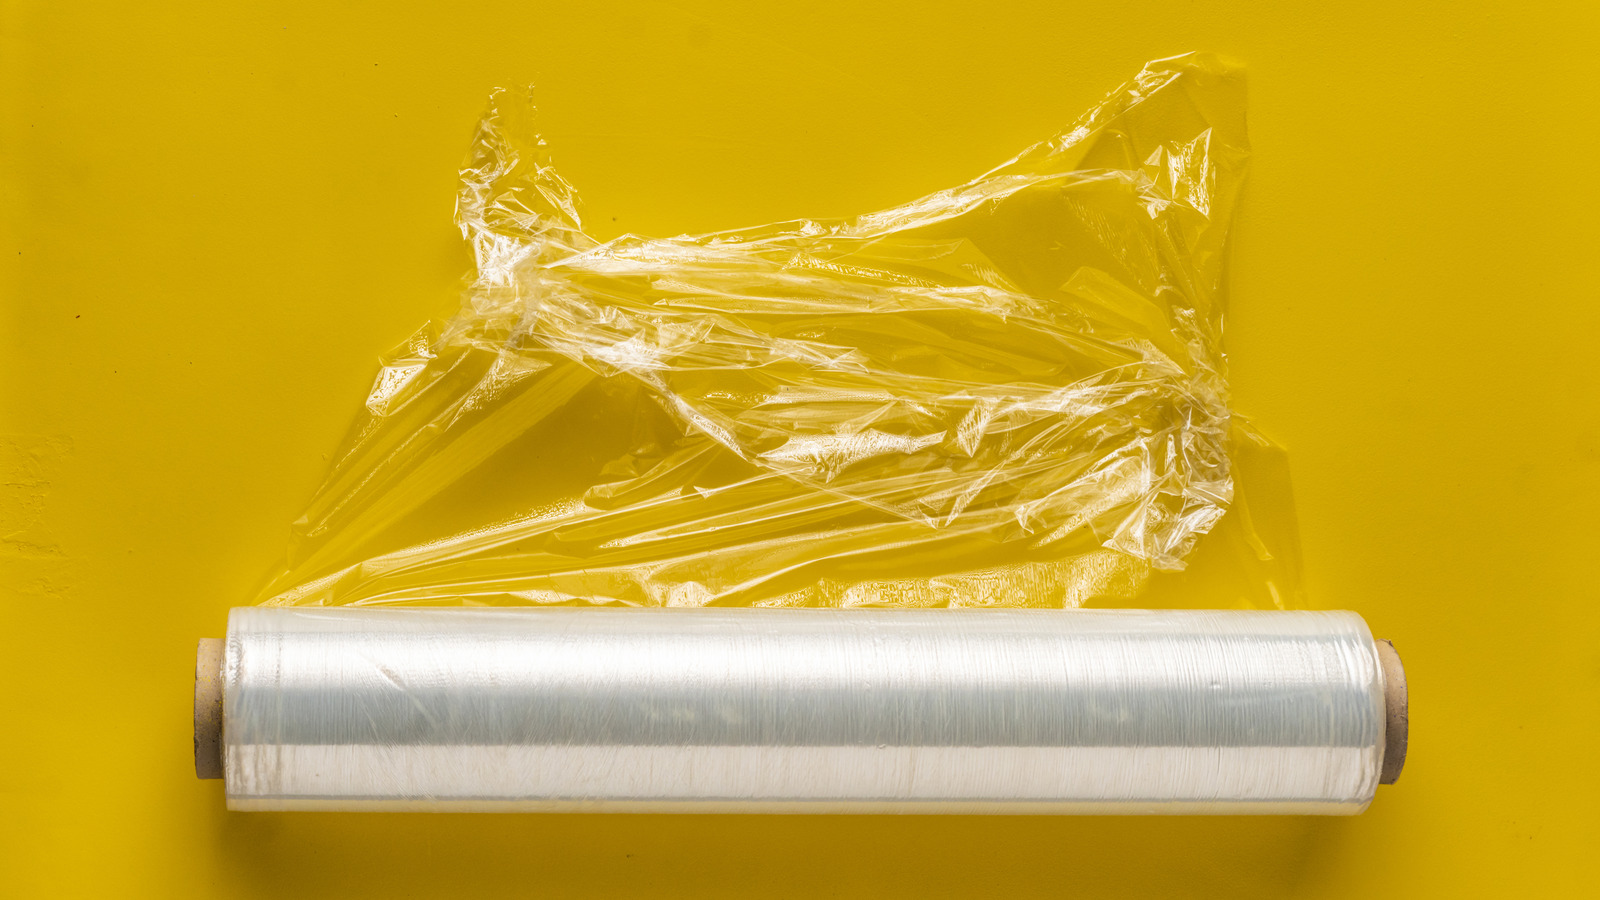 Aluminum foil or plastic wrap for leftovers?